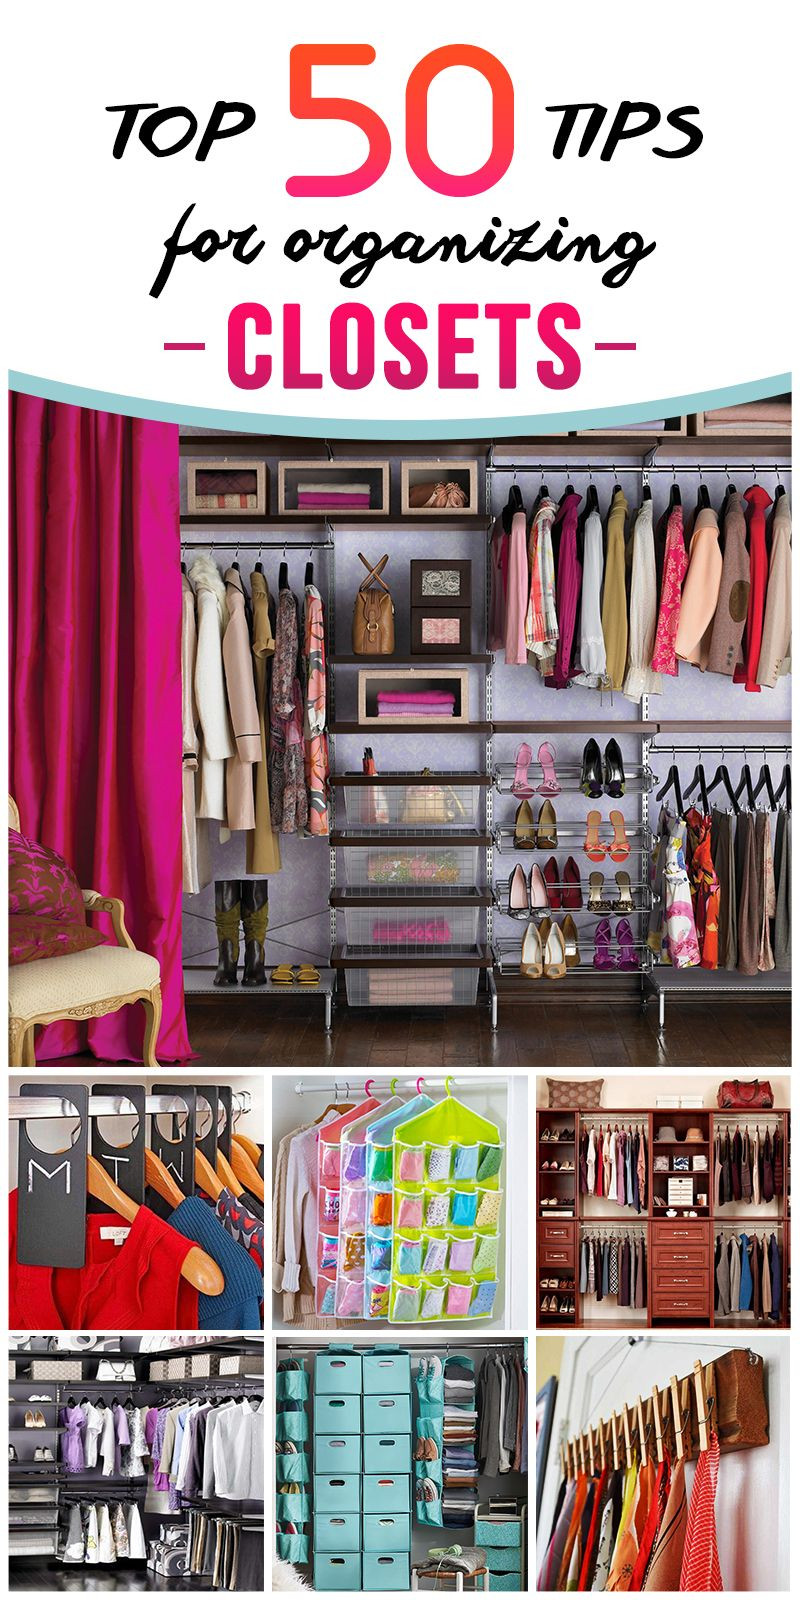 DIY Closet Organizing Ideas
 Tips And Organization Ideas For Your Closet